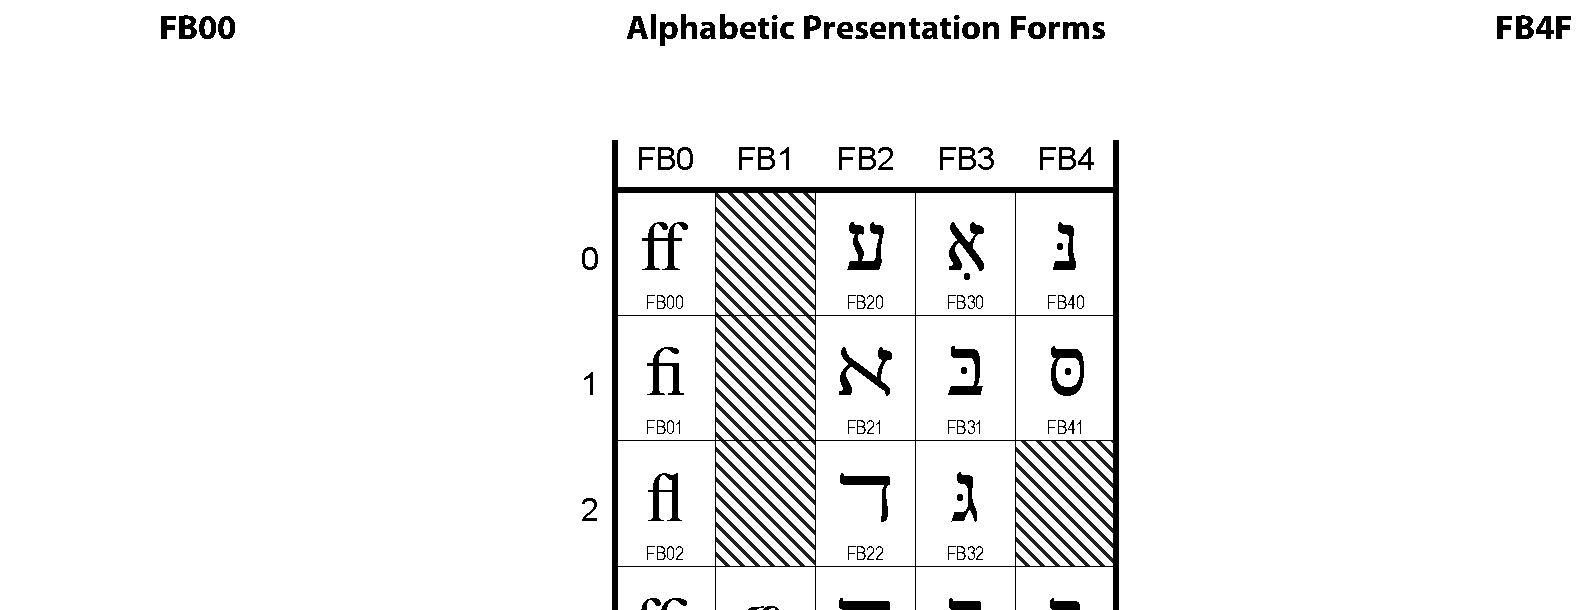 Unicode - Alphabetic Presentation Forms